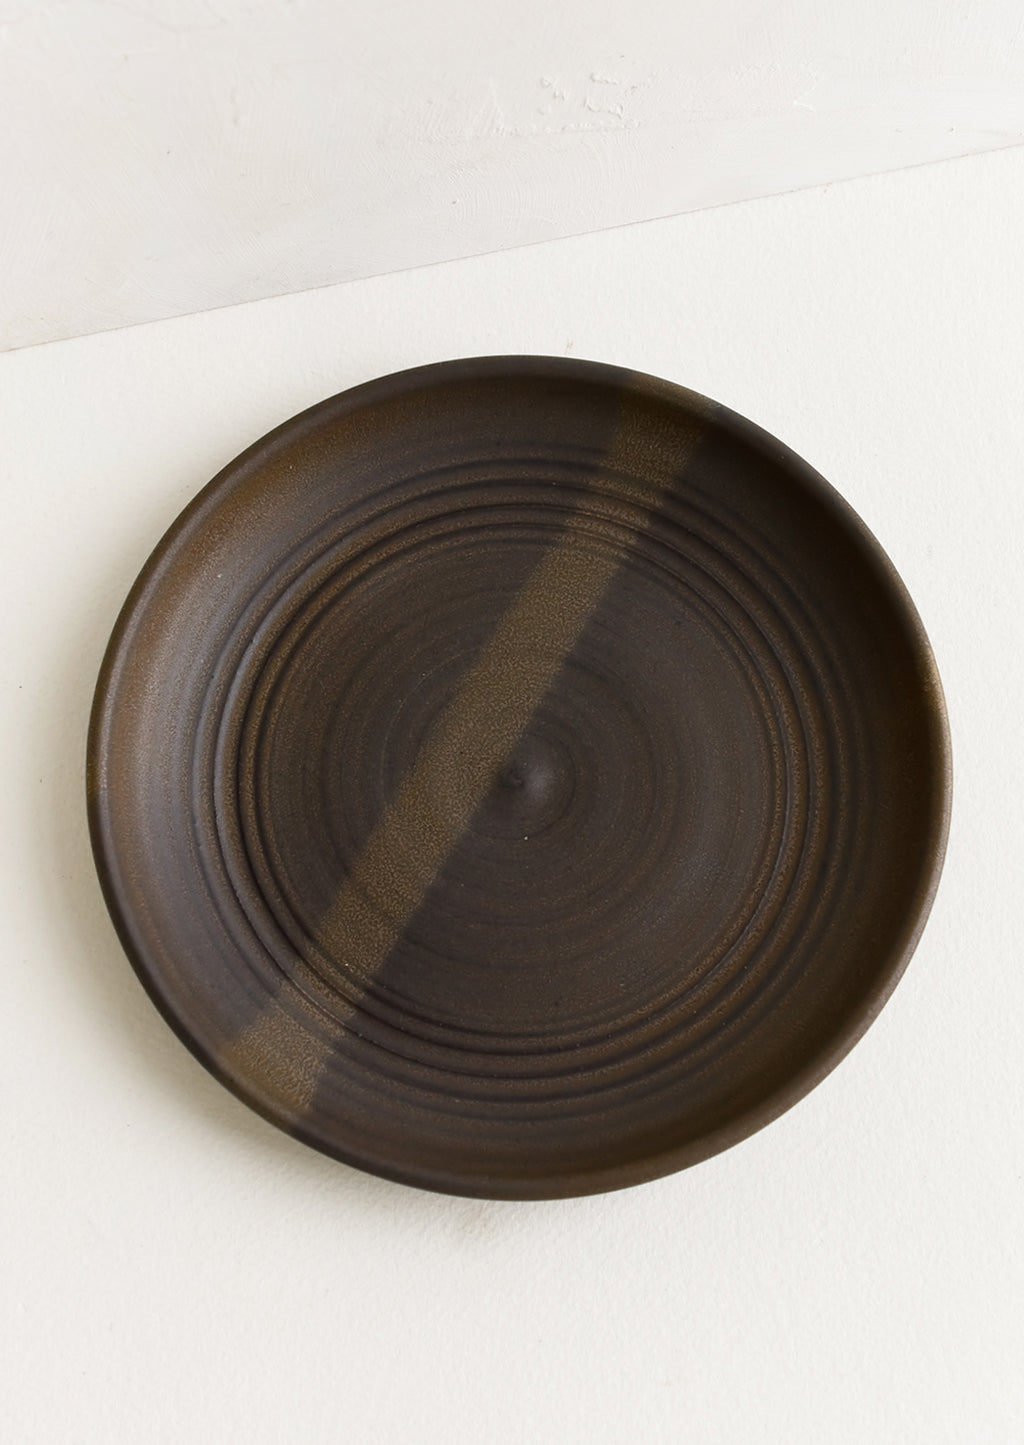 Matte Earth / Dessert Plate: A ceramic side plate in a matte dark brown glaze.